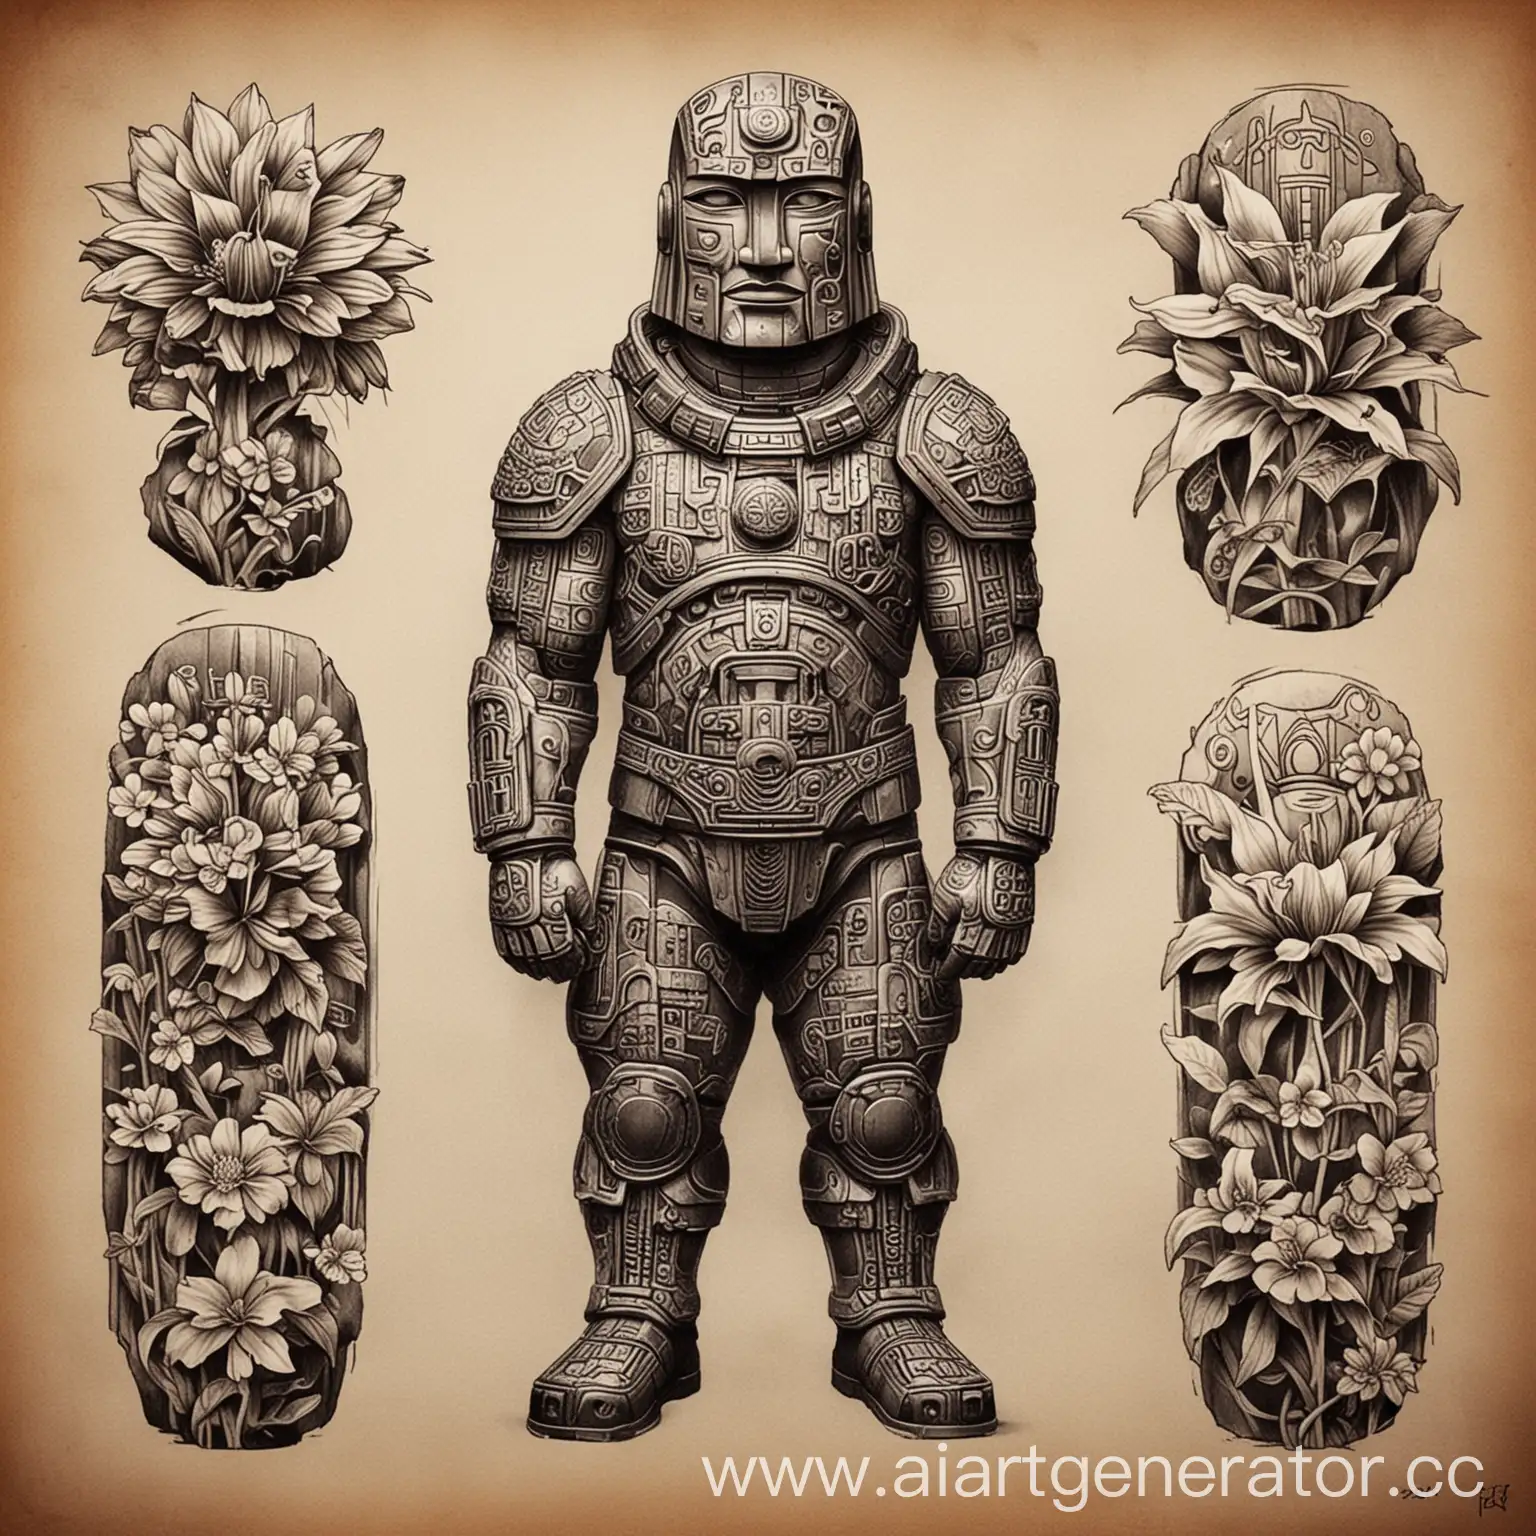 Futuristic-Moai-Astronaut-Tattoo-Spacethemed-Japanese-Ink-Art